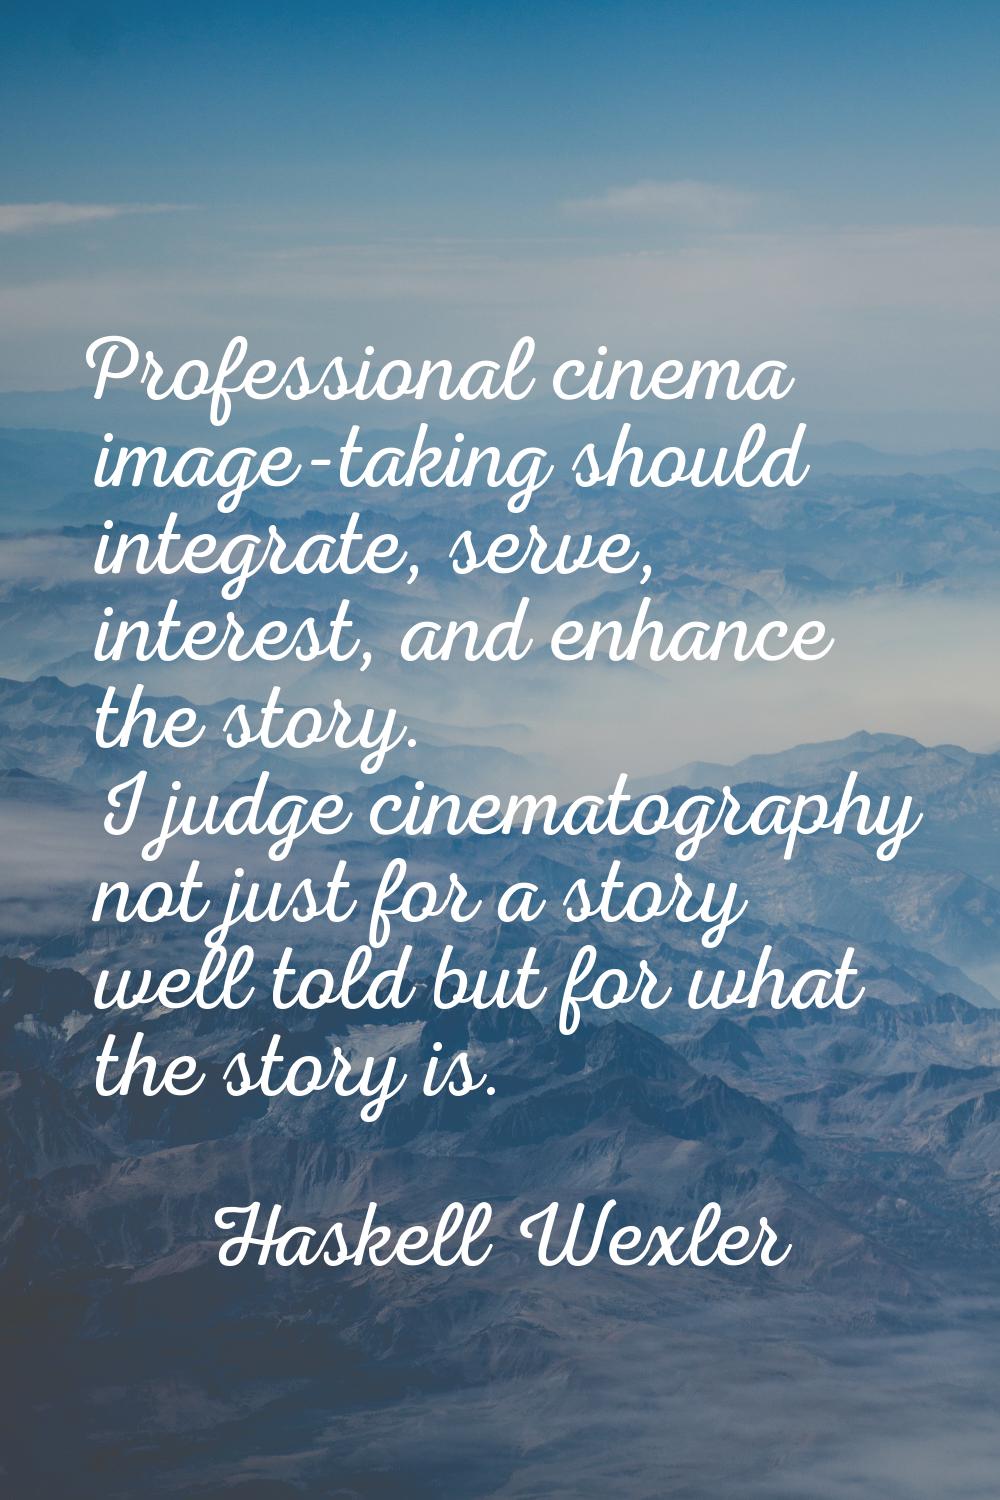 Professional cinema image-taking should integrate, serve, interest, and enhance the story. I judge 